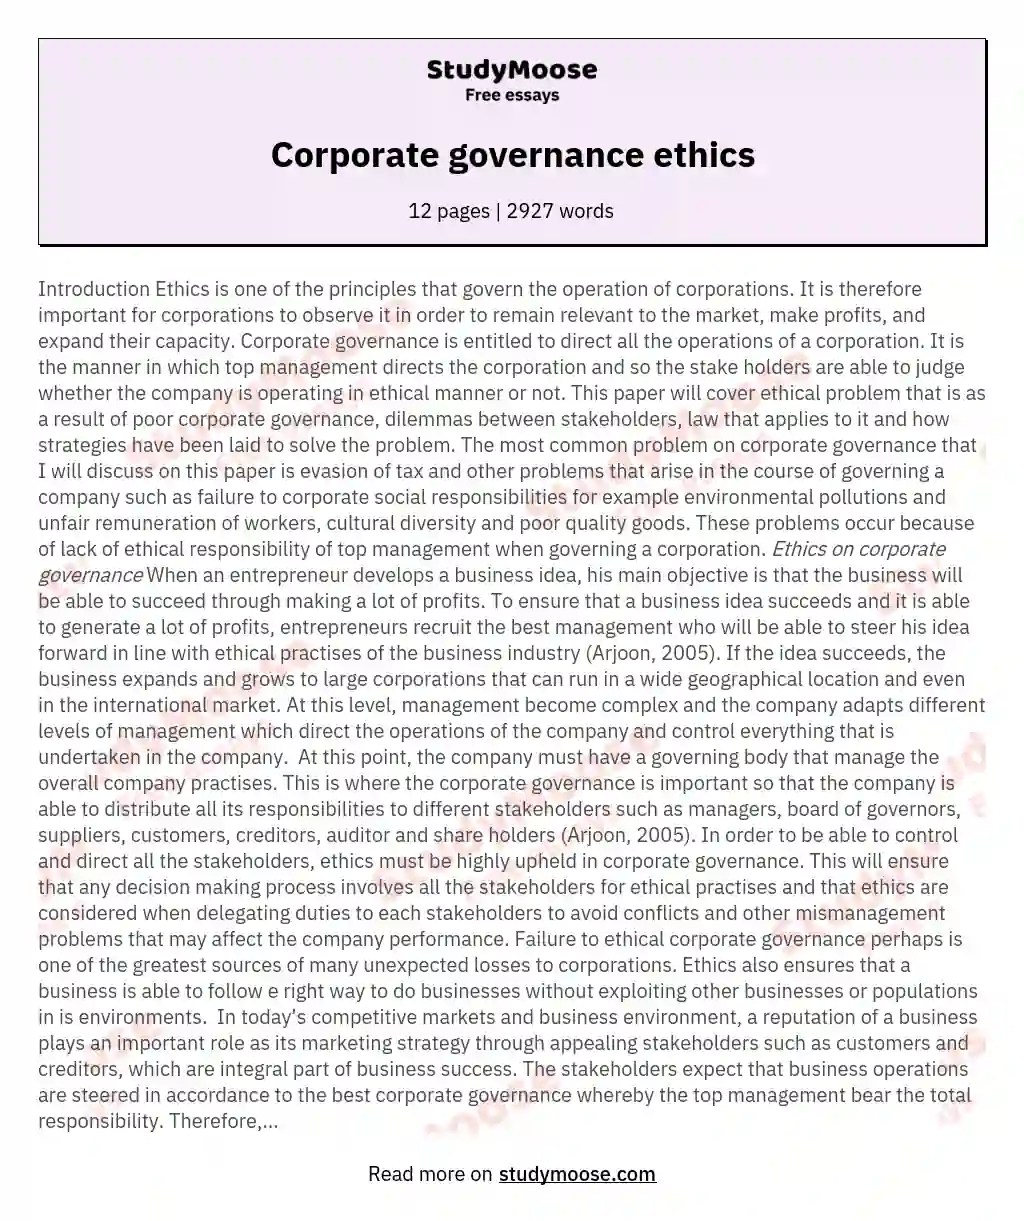 Corporate governance ethics